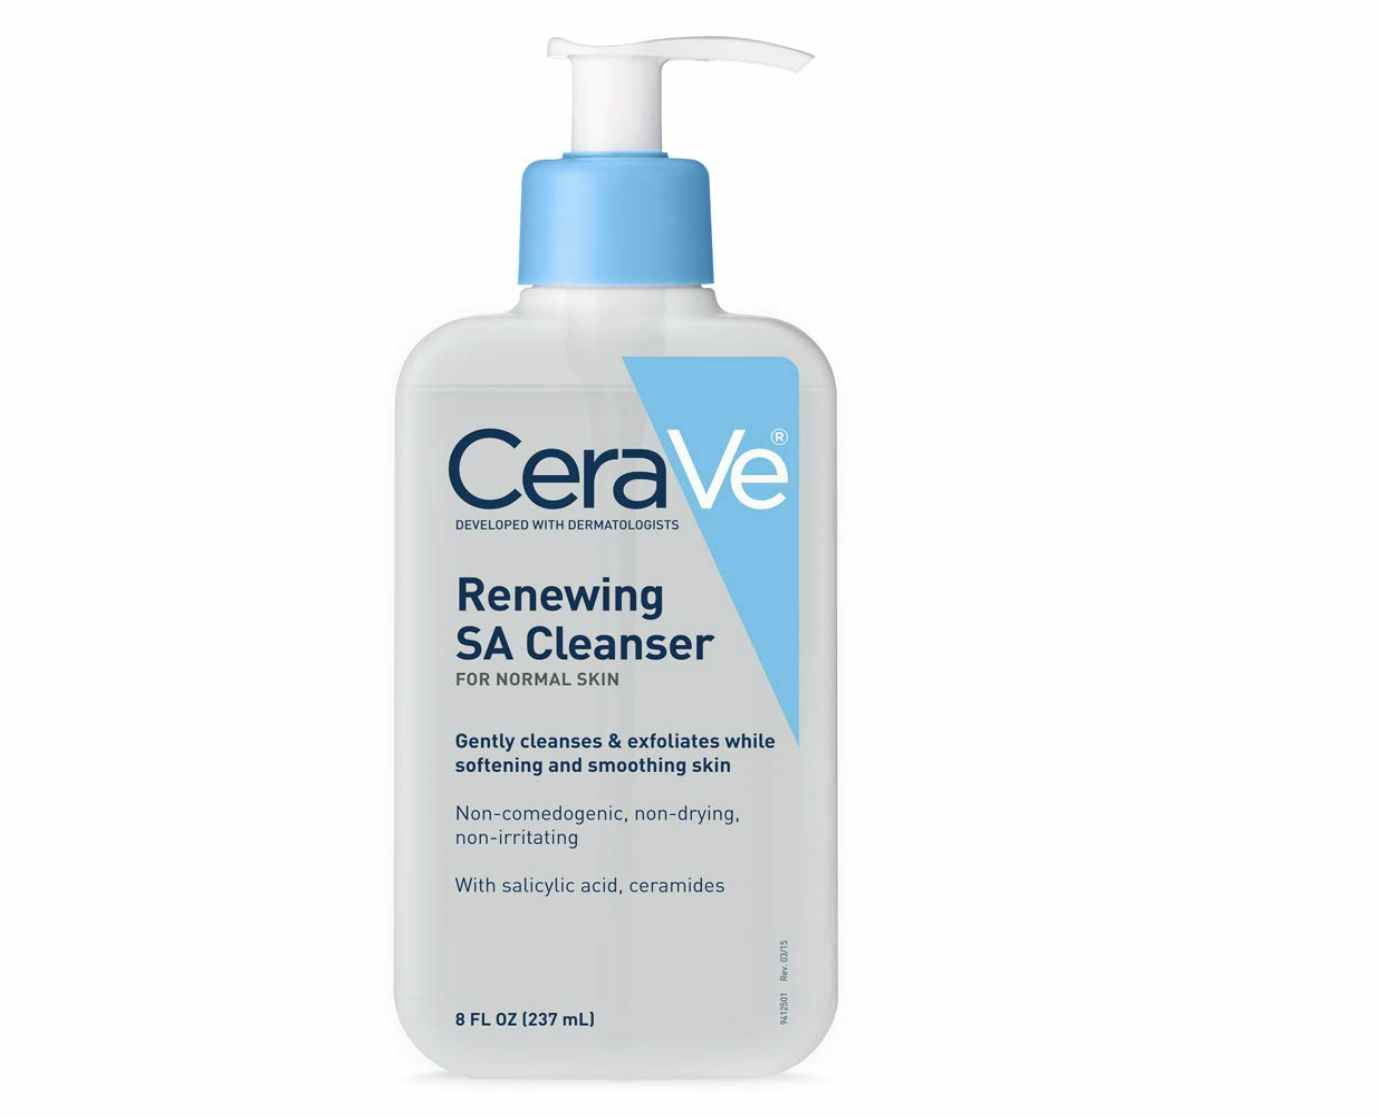 CeraVe SA Cleanser